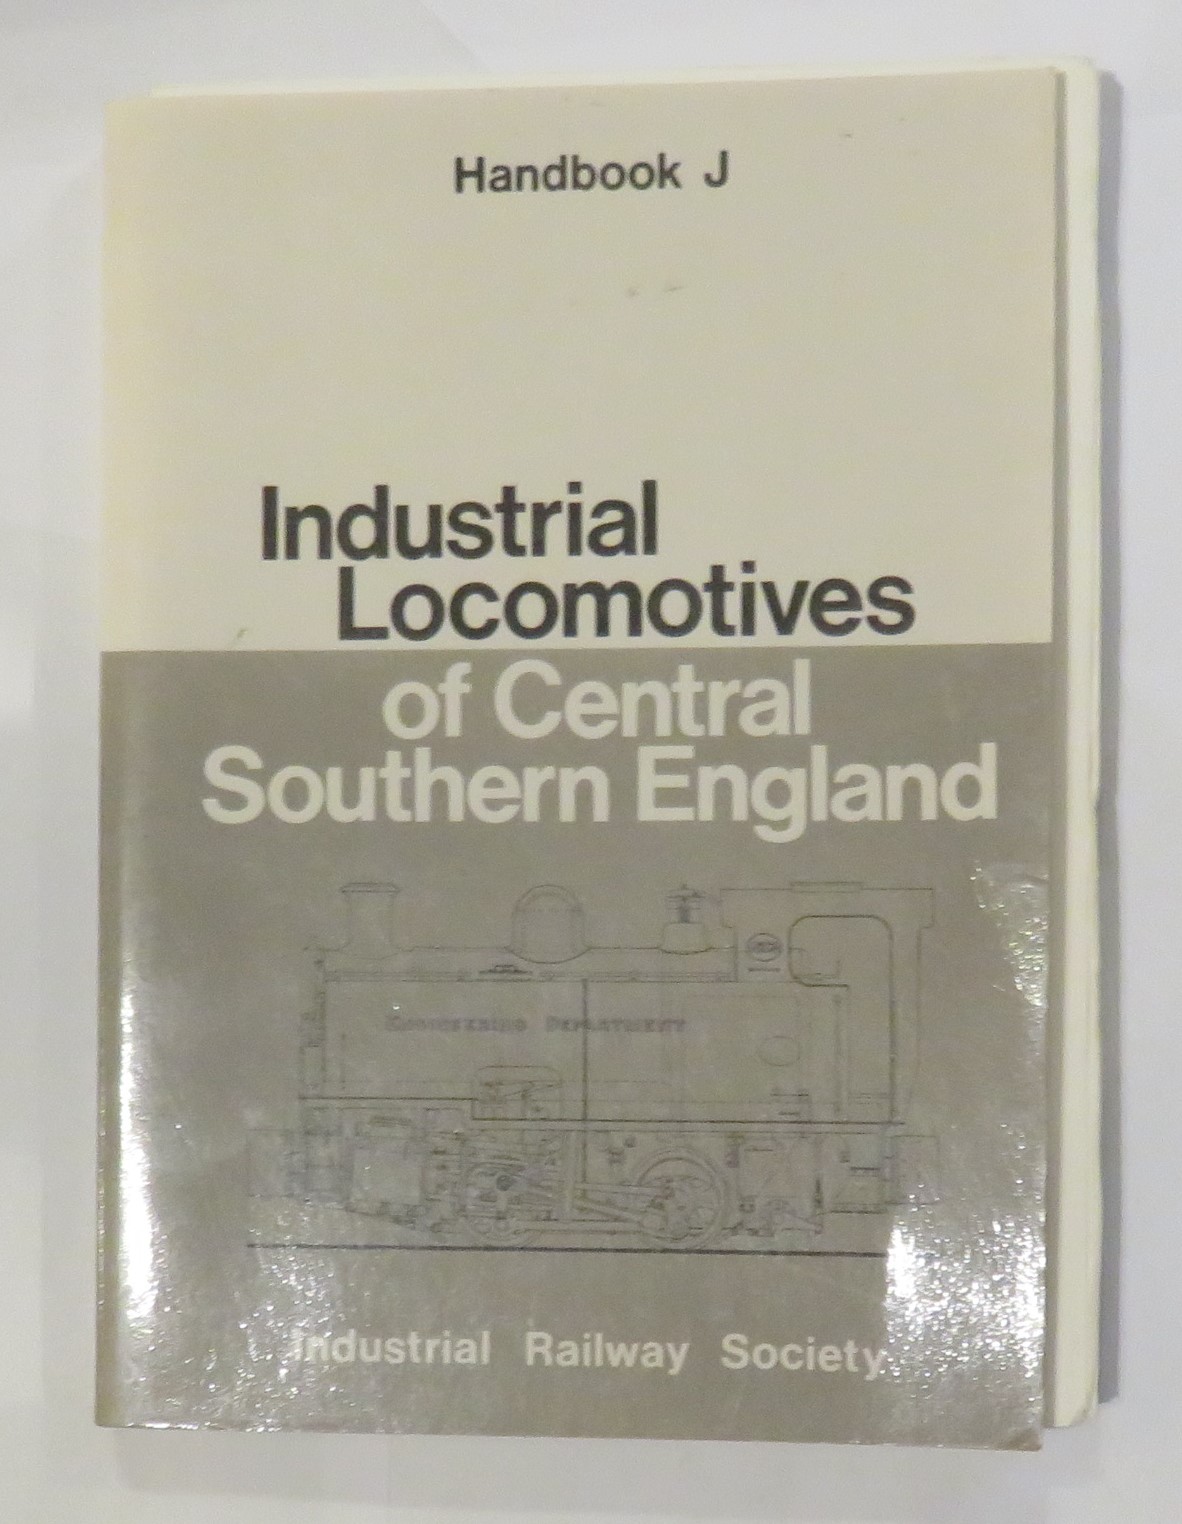 Handbook J: Industrial Locomotives of Central Southern England